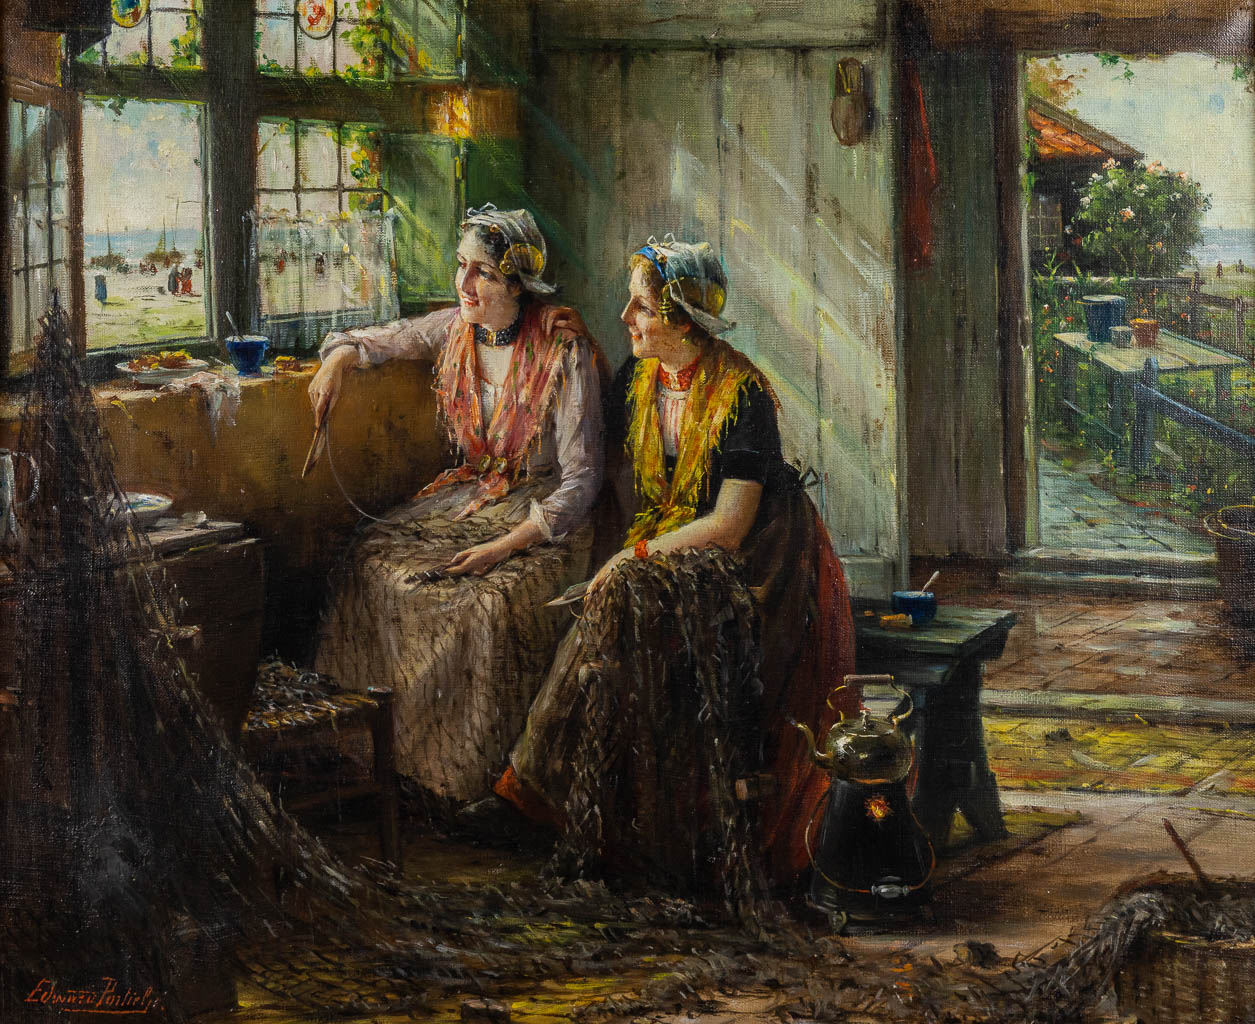 Edward Antoon PORTIELJE (1861-1949) 'Girls by the Window' oil on canvas. (W:55 x H:45 cm)